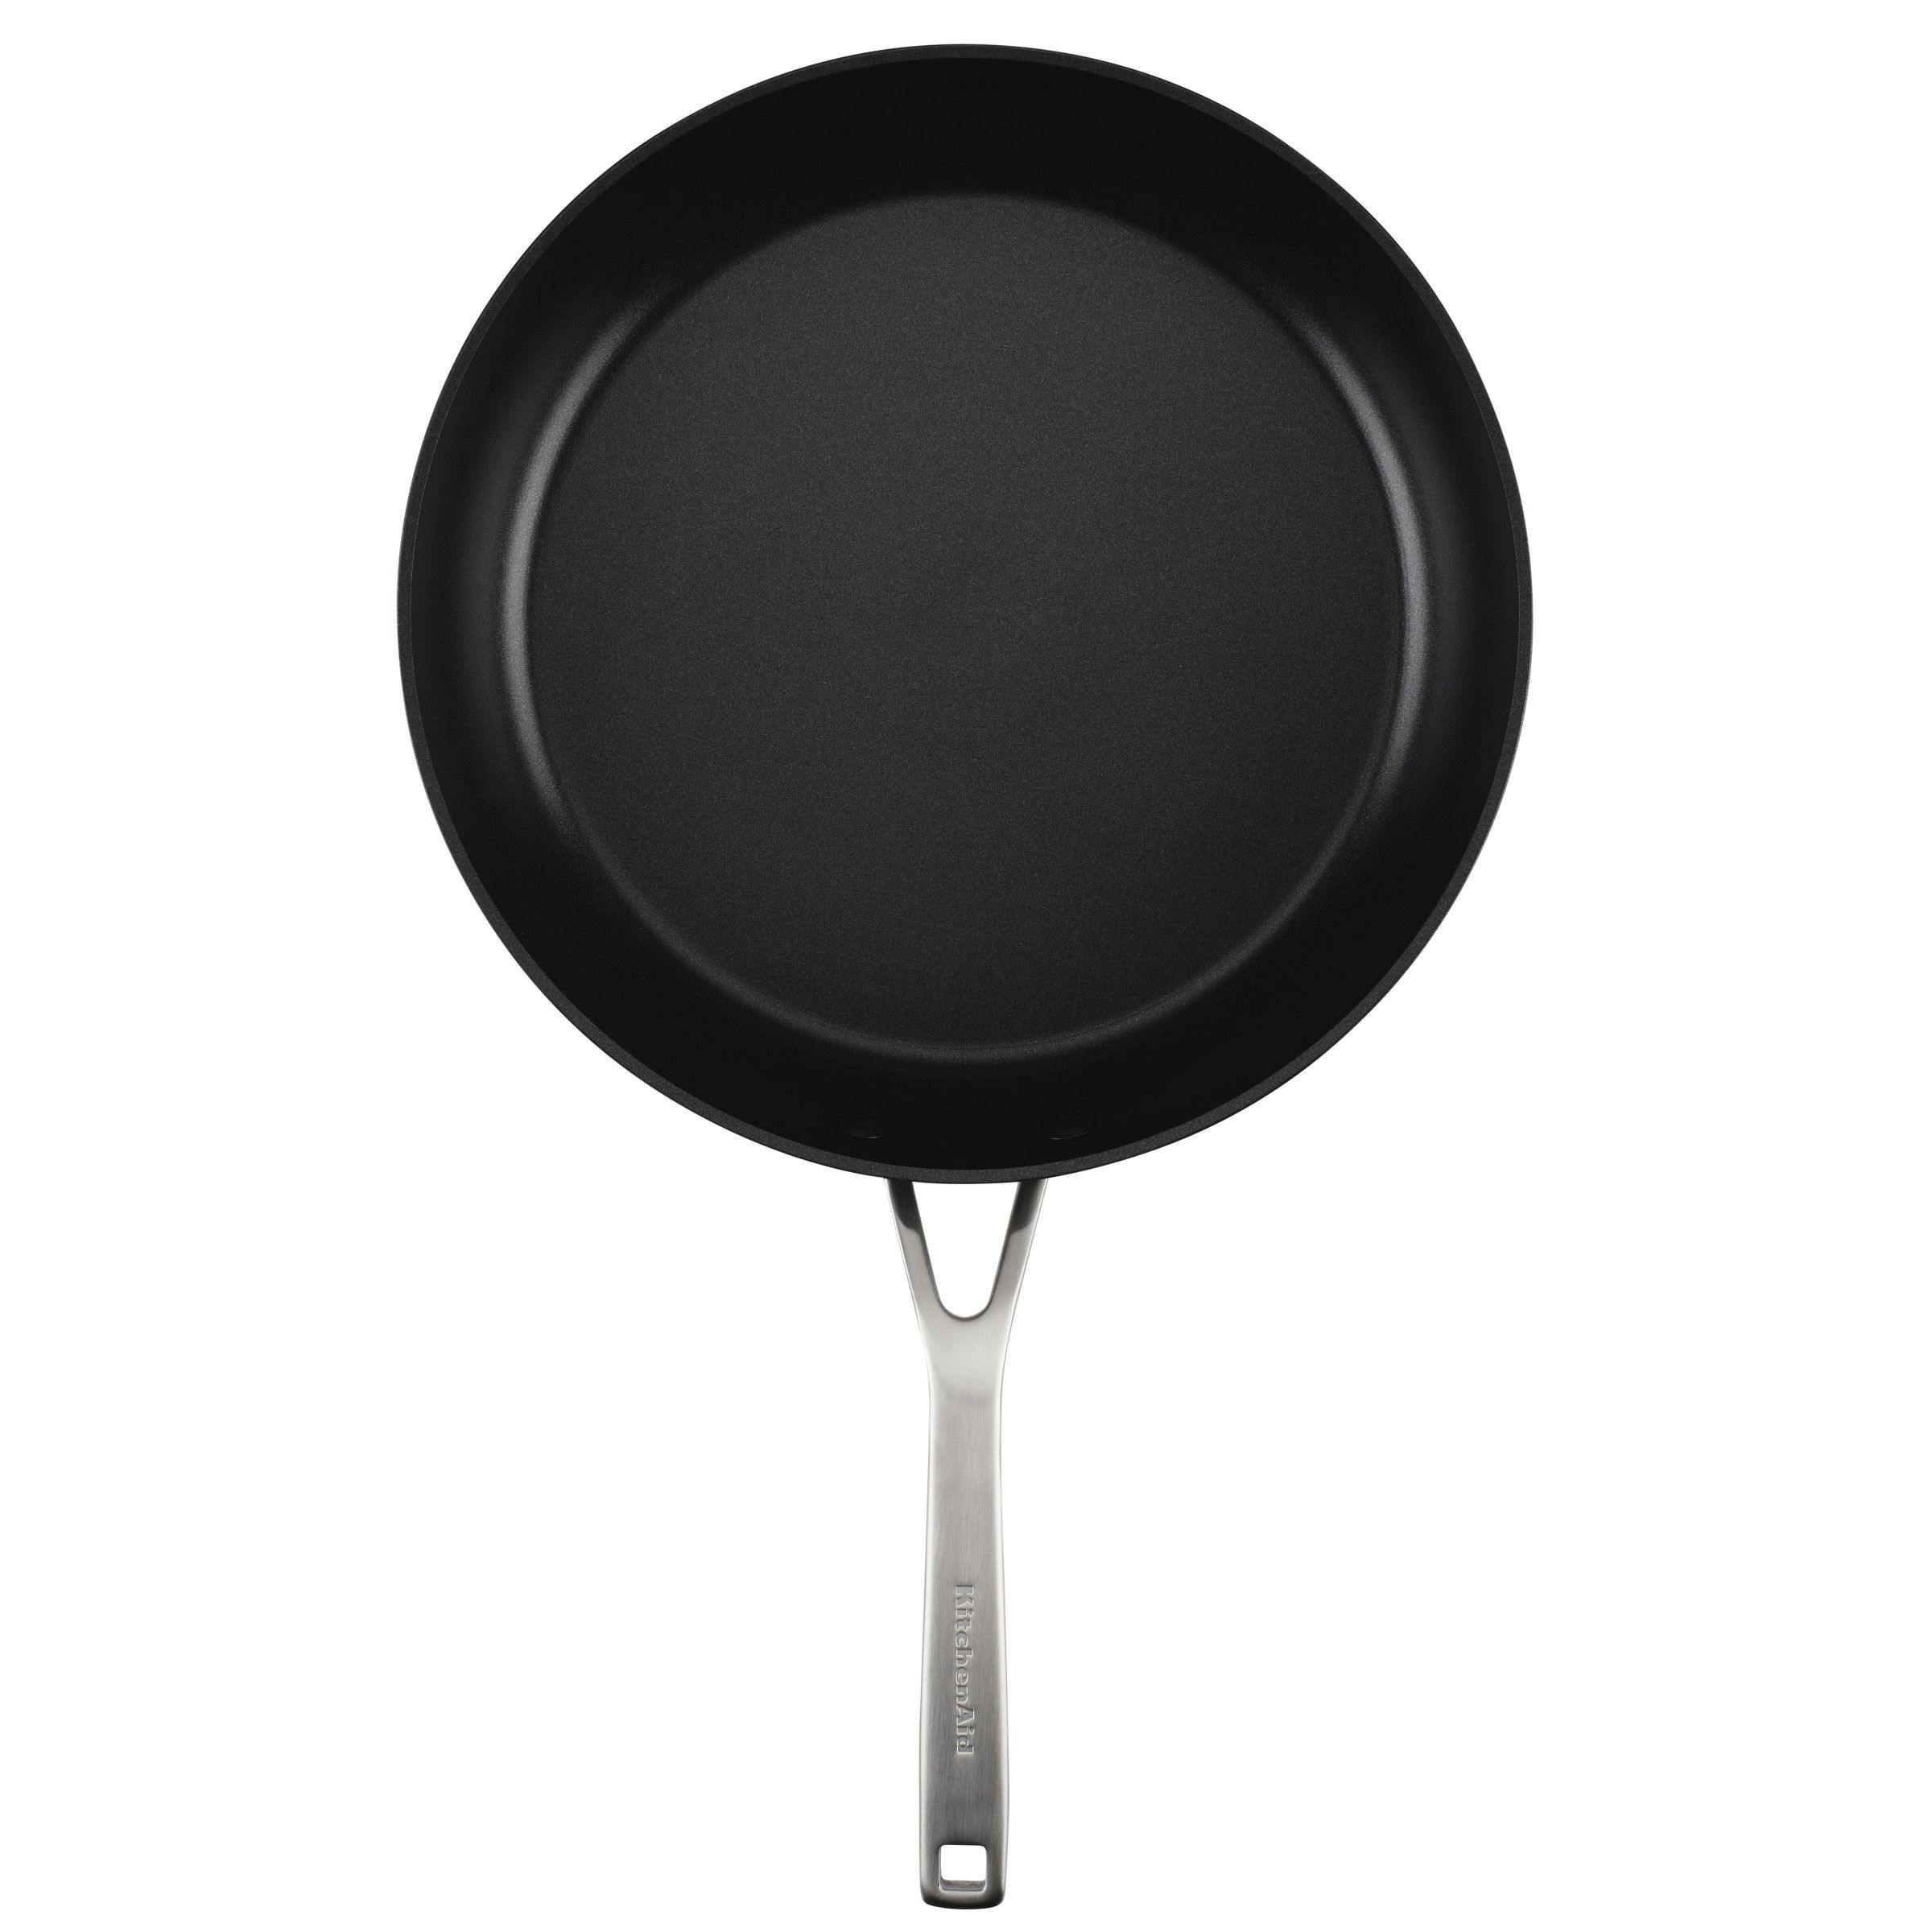 KitchenAid 10pc Hard Anodized Nonstick Cookware Set Black